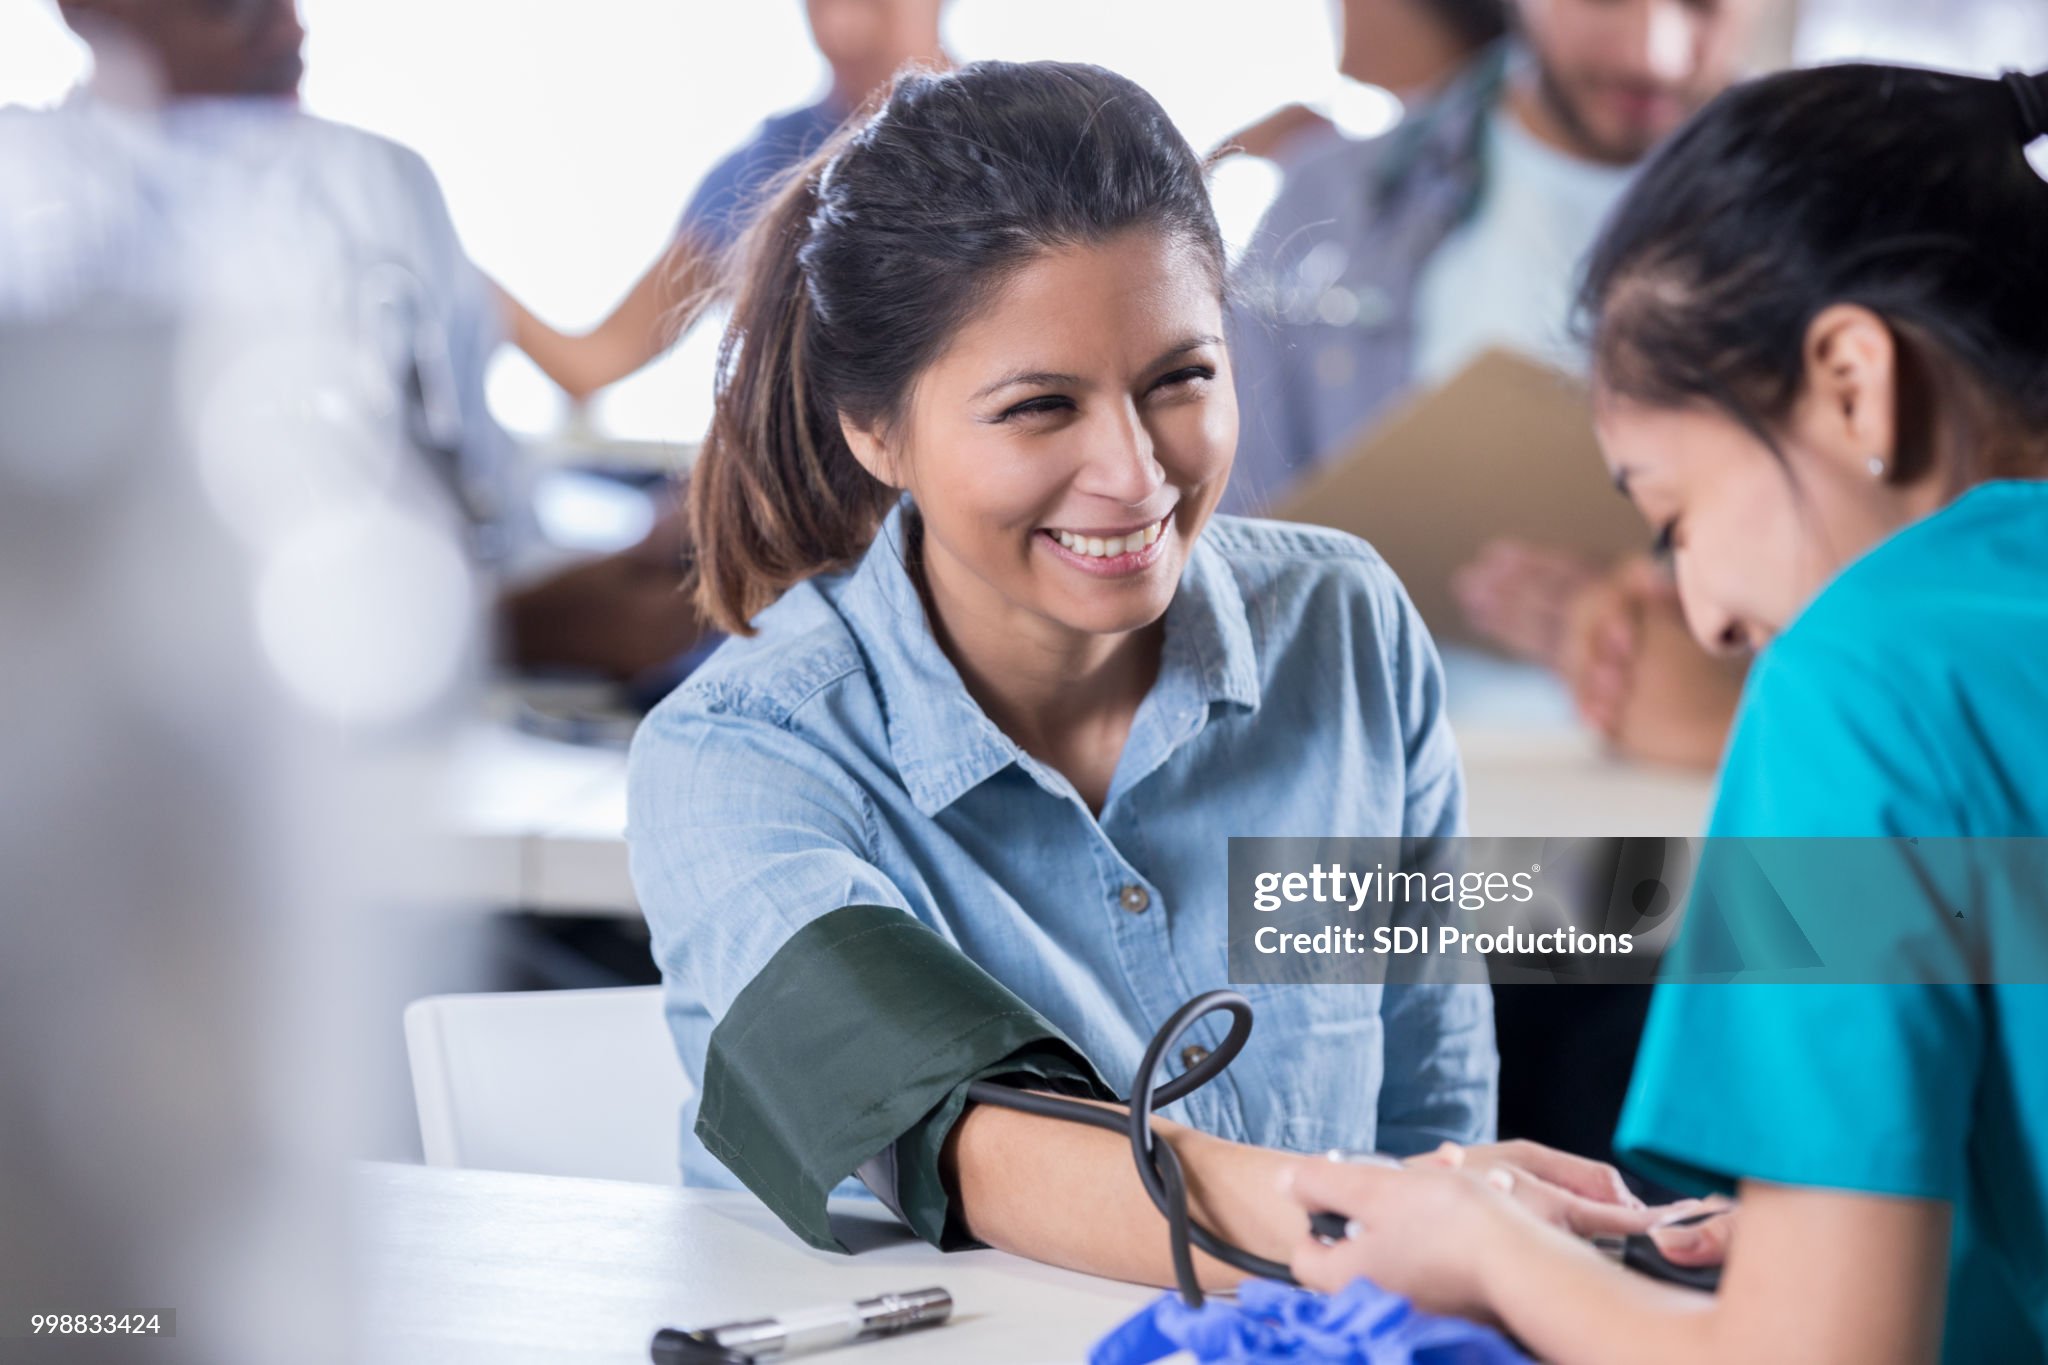 Volunteer nurse checks patient's blood pressure